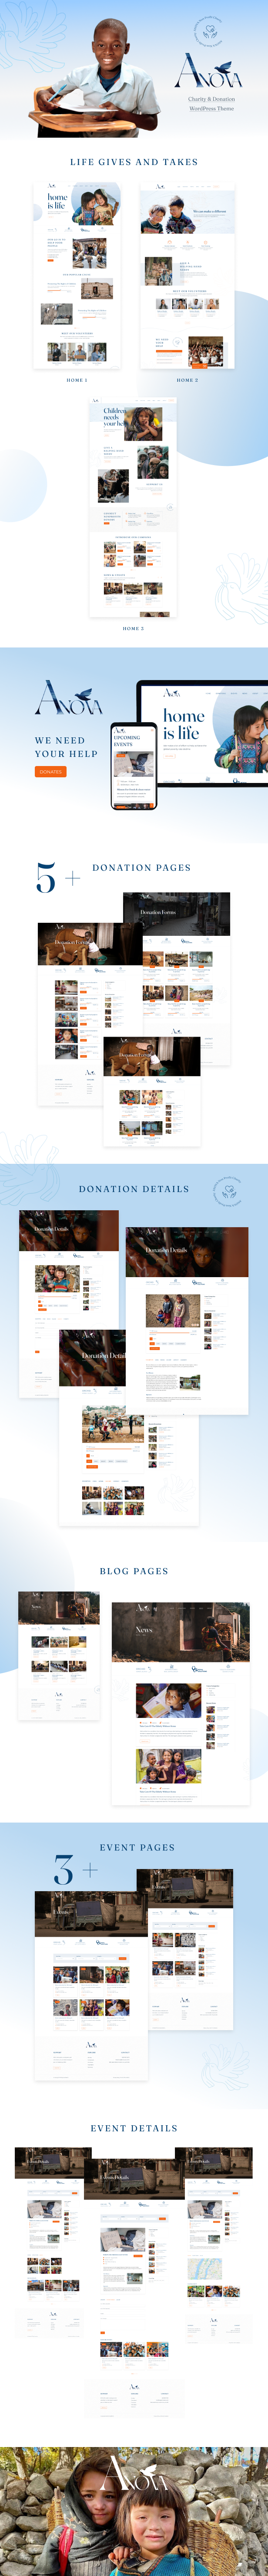 Anova - Charity & Donation WordPress Theme